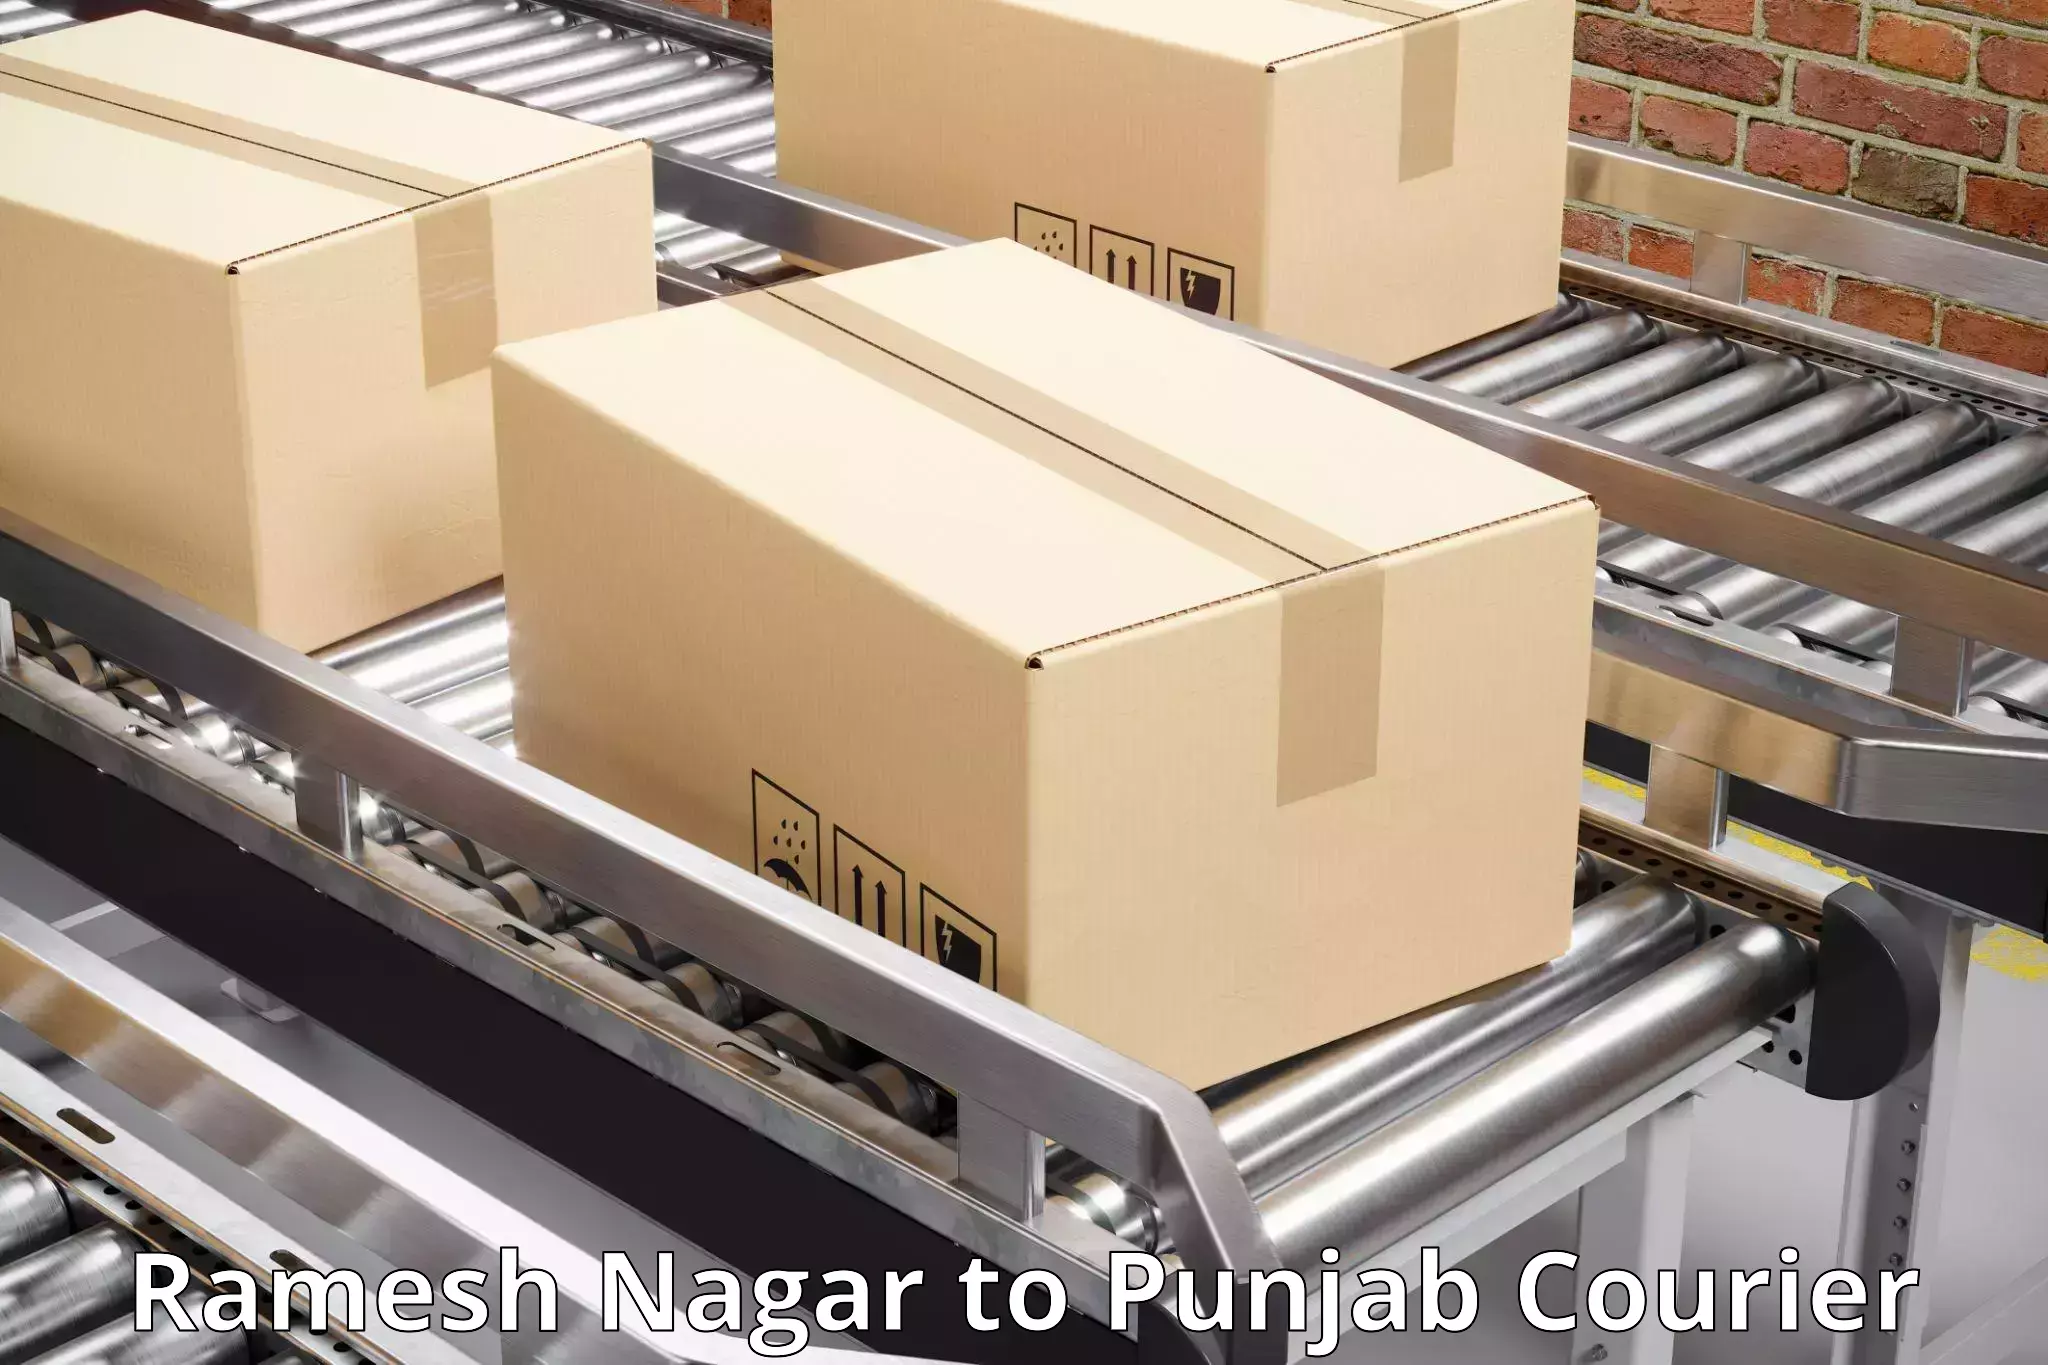 International parcel service Ramesh Nagar to Batala